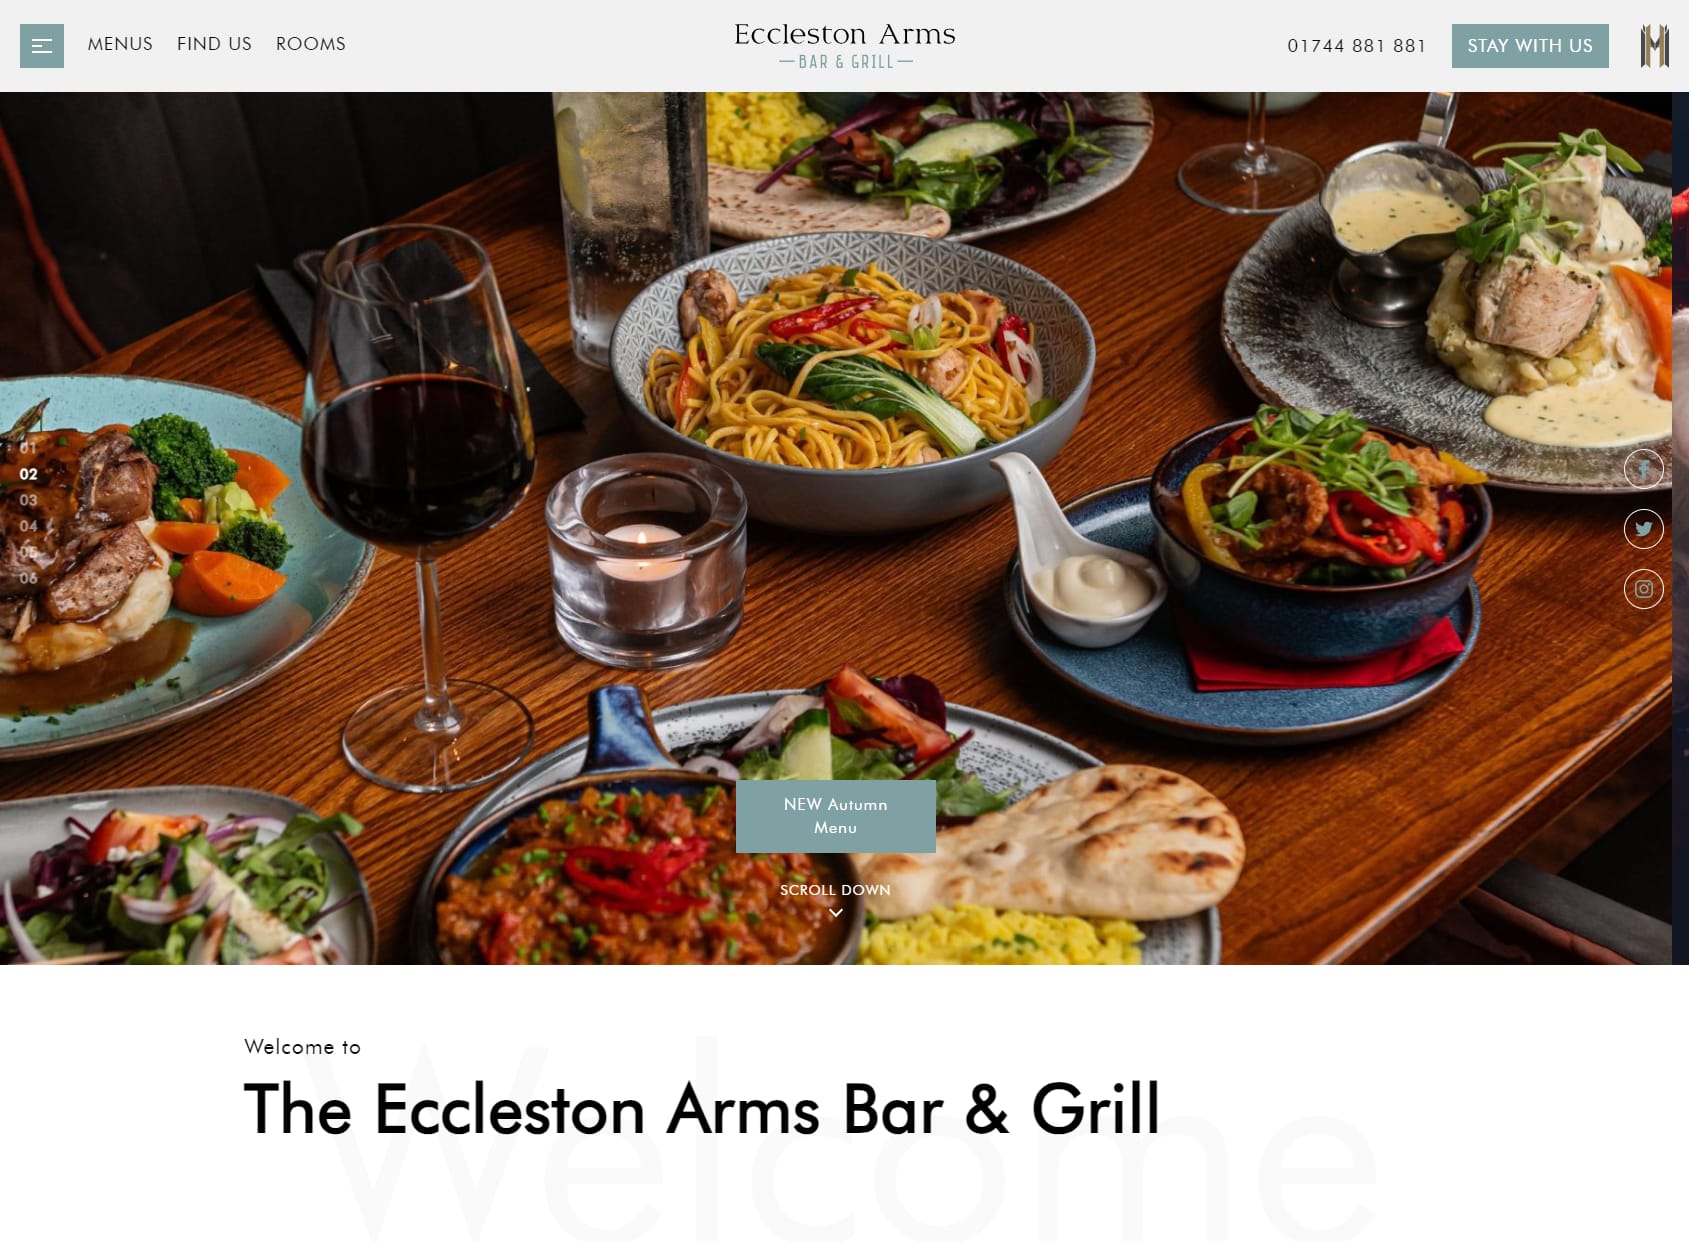 The Eccleston Arms